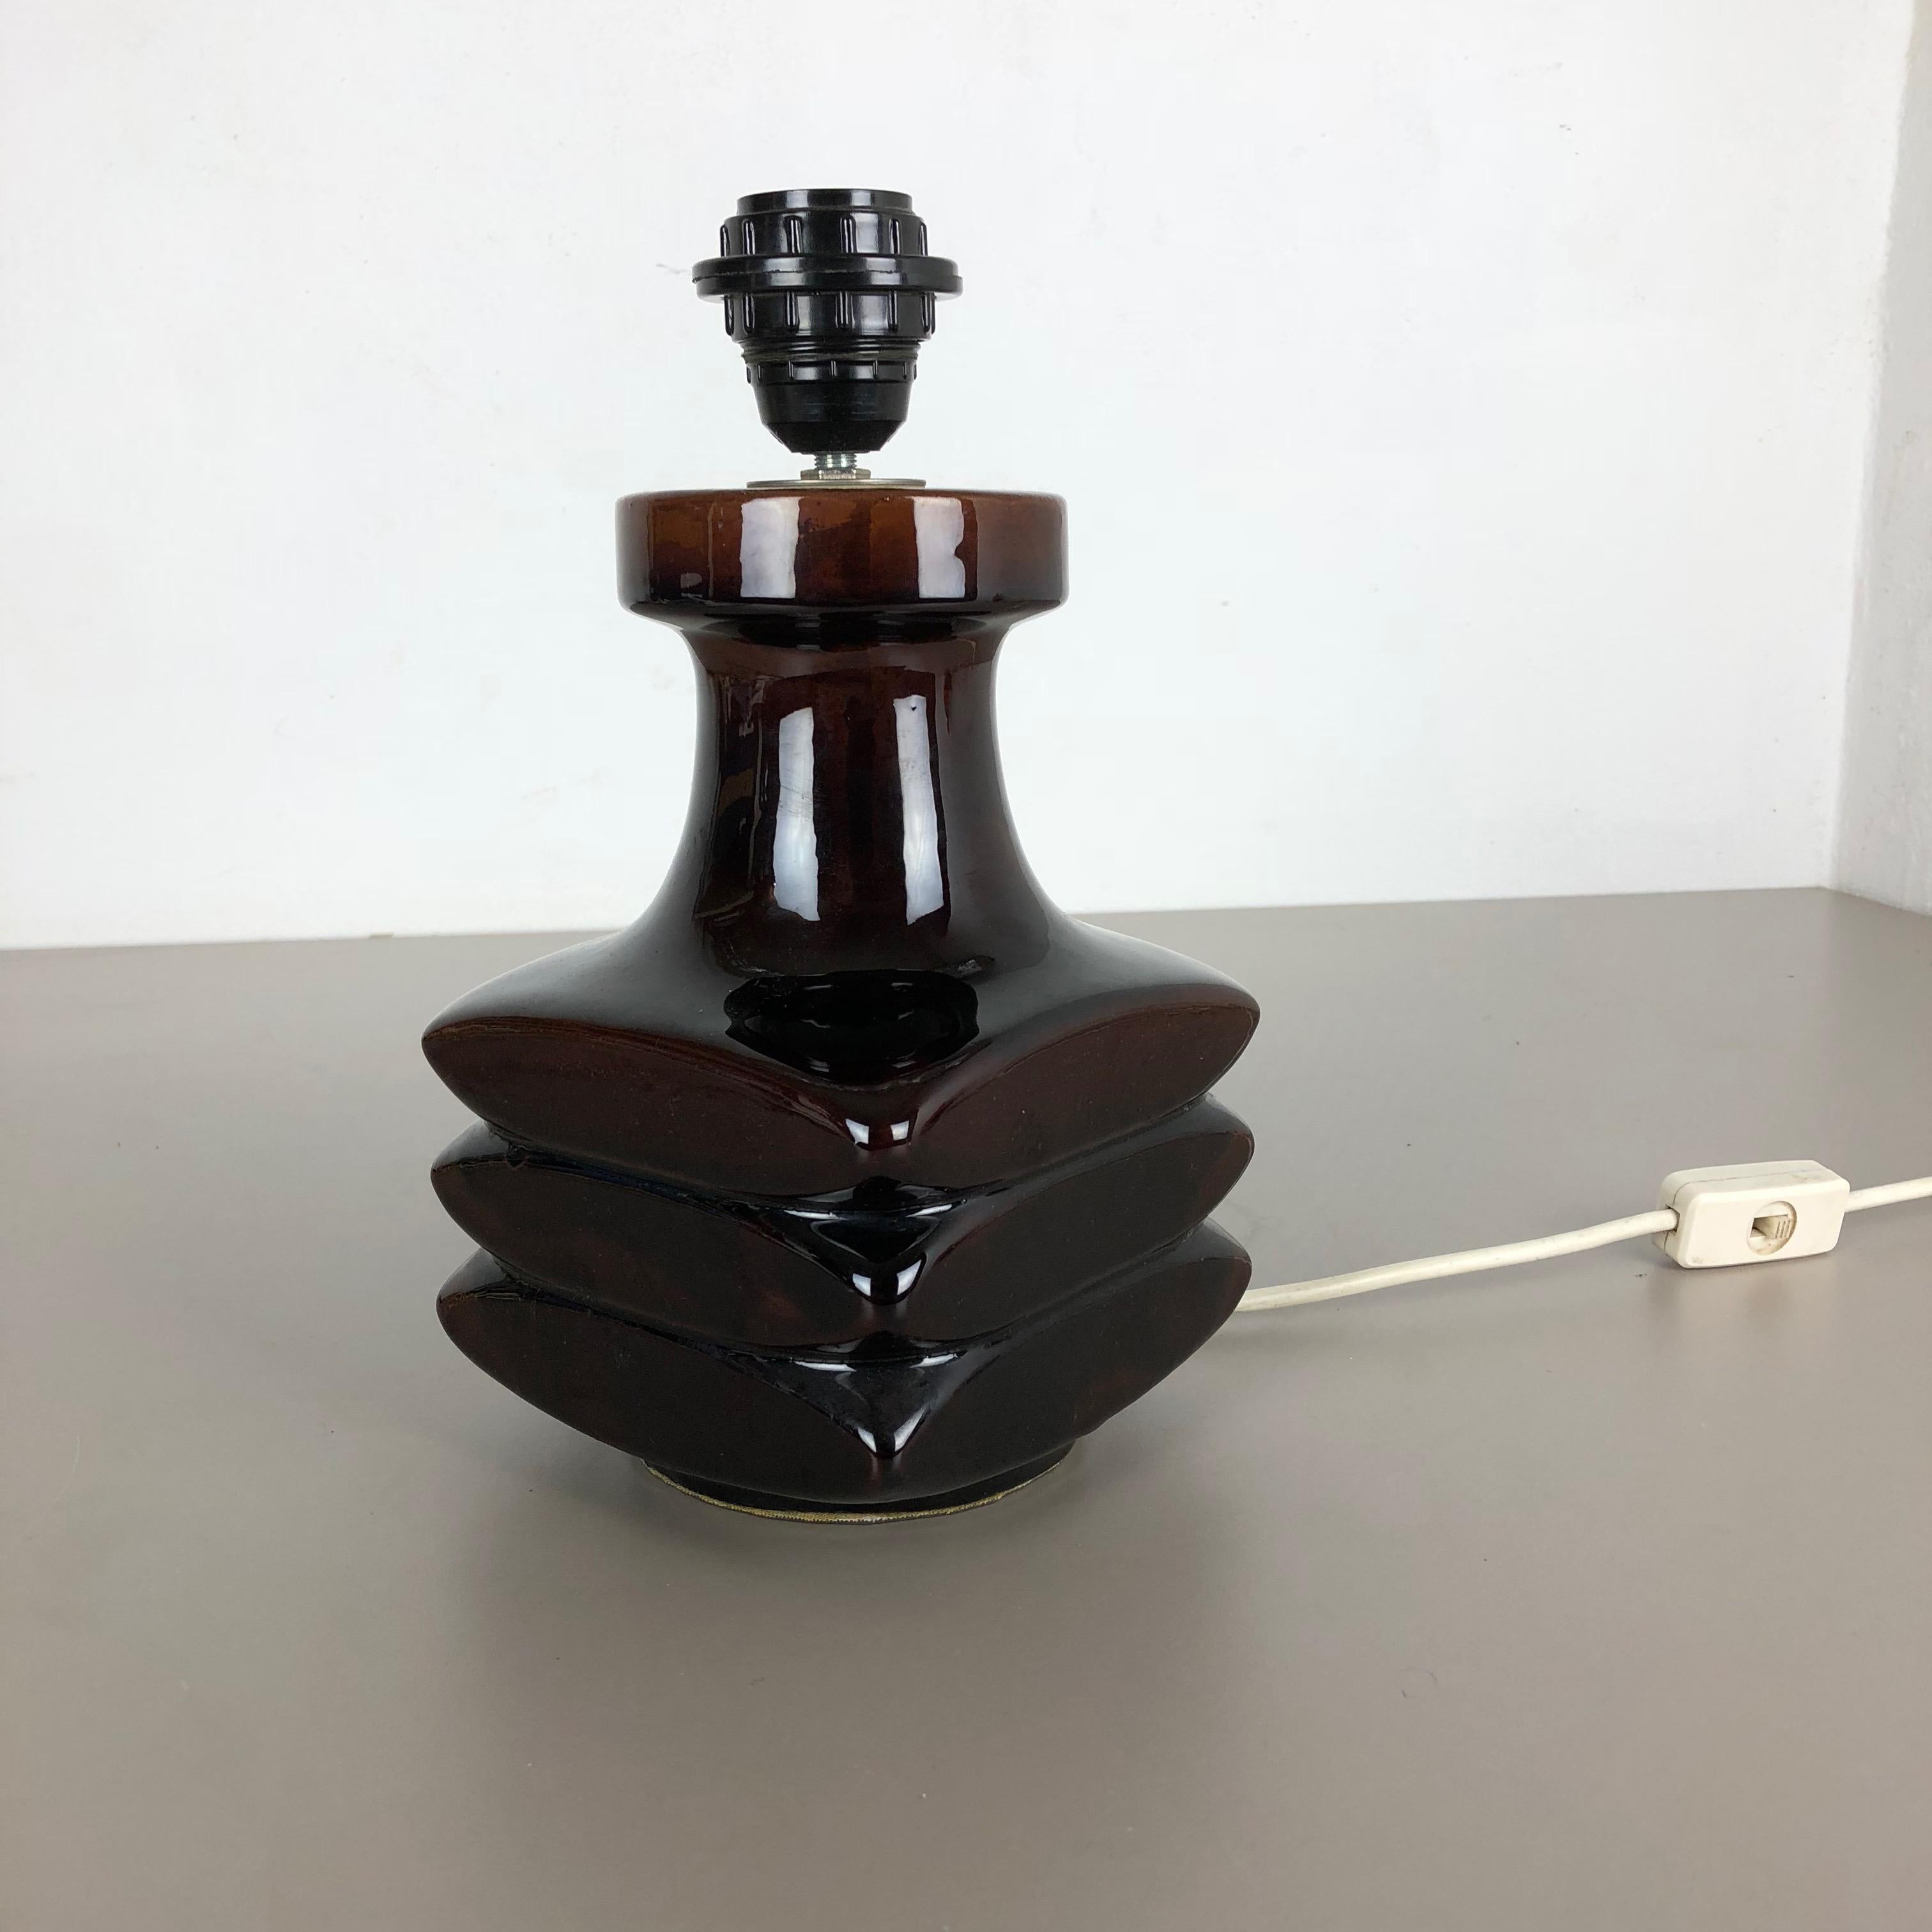 Article:

Ceramic table light


Producer:

Steuler, Germany


Designer:

Cari Zalloni




Decade:

1970s



Description:

This original vintage ceramic Pottery light base was designed in the 1970s by Cari Zalloni. This brown